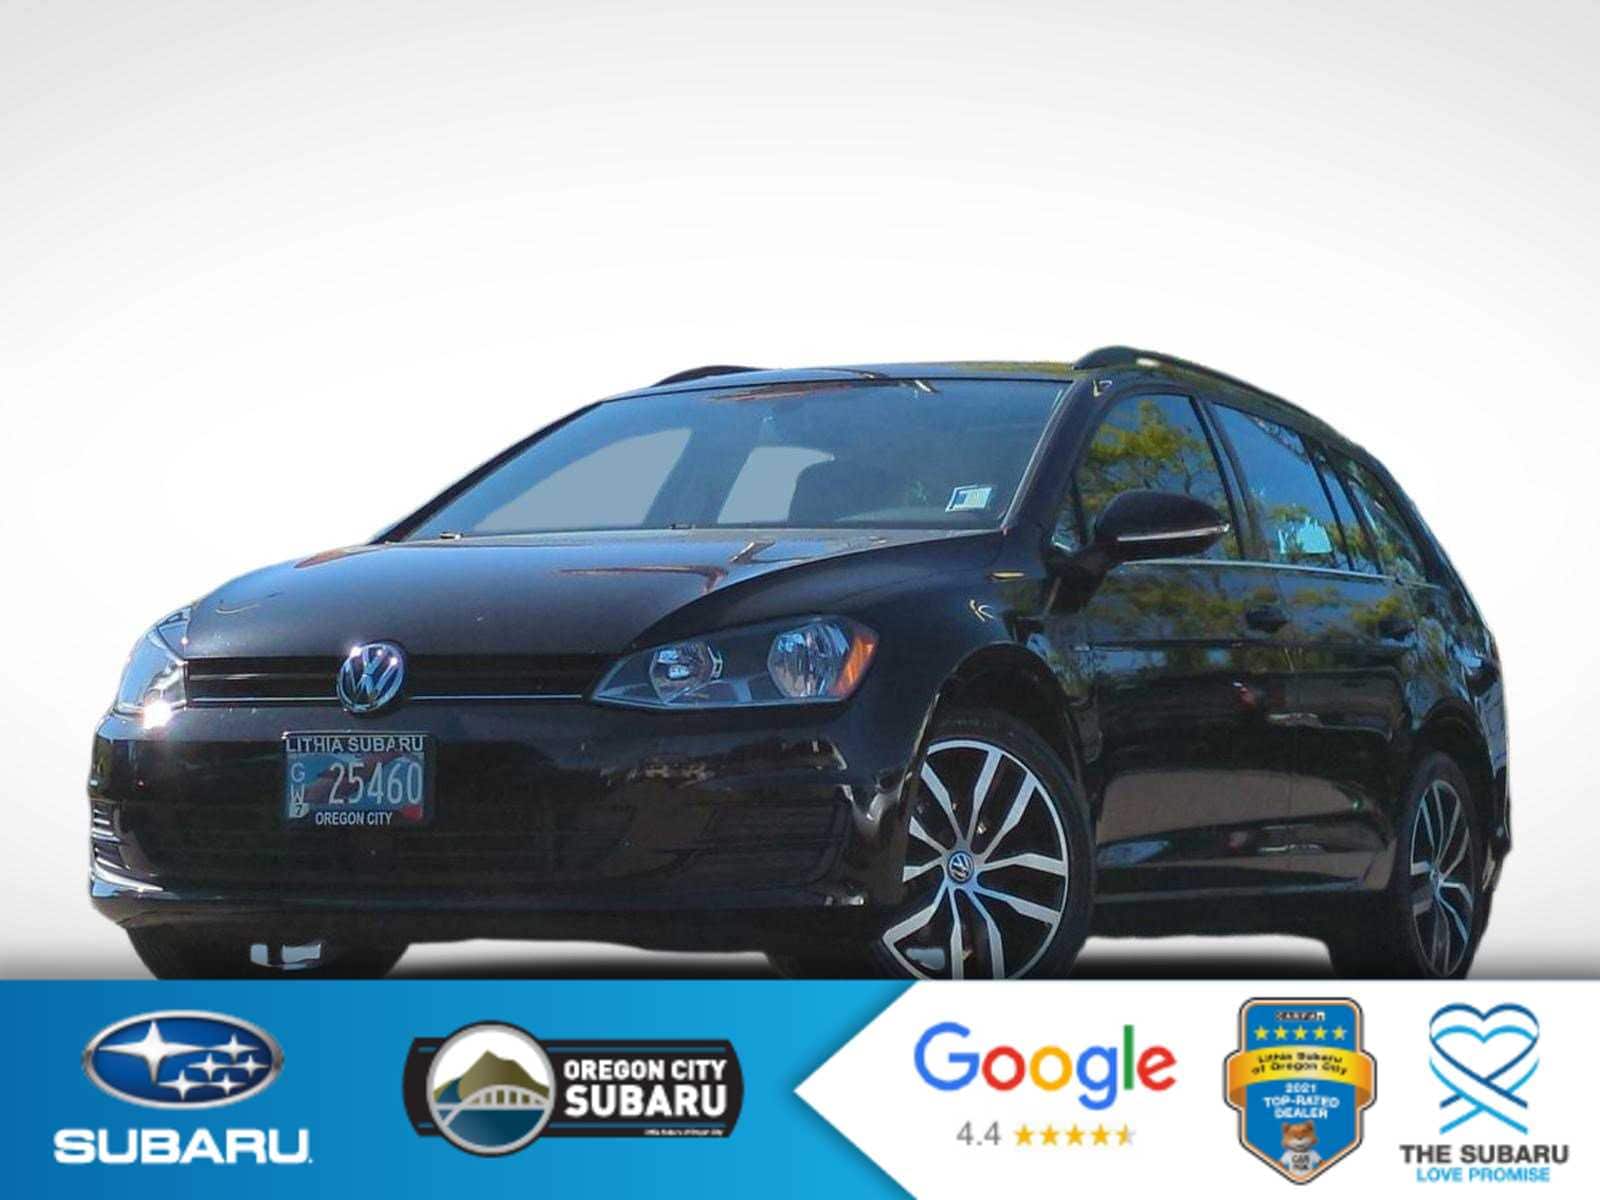 2016 Volkswagen e-Golf Limited Edition -
                Oregon City, OR